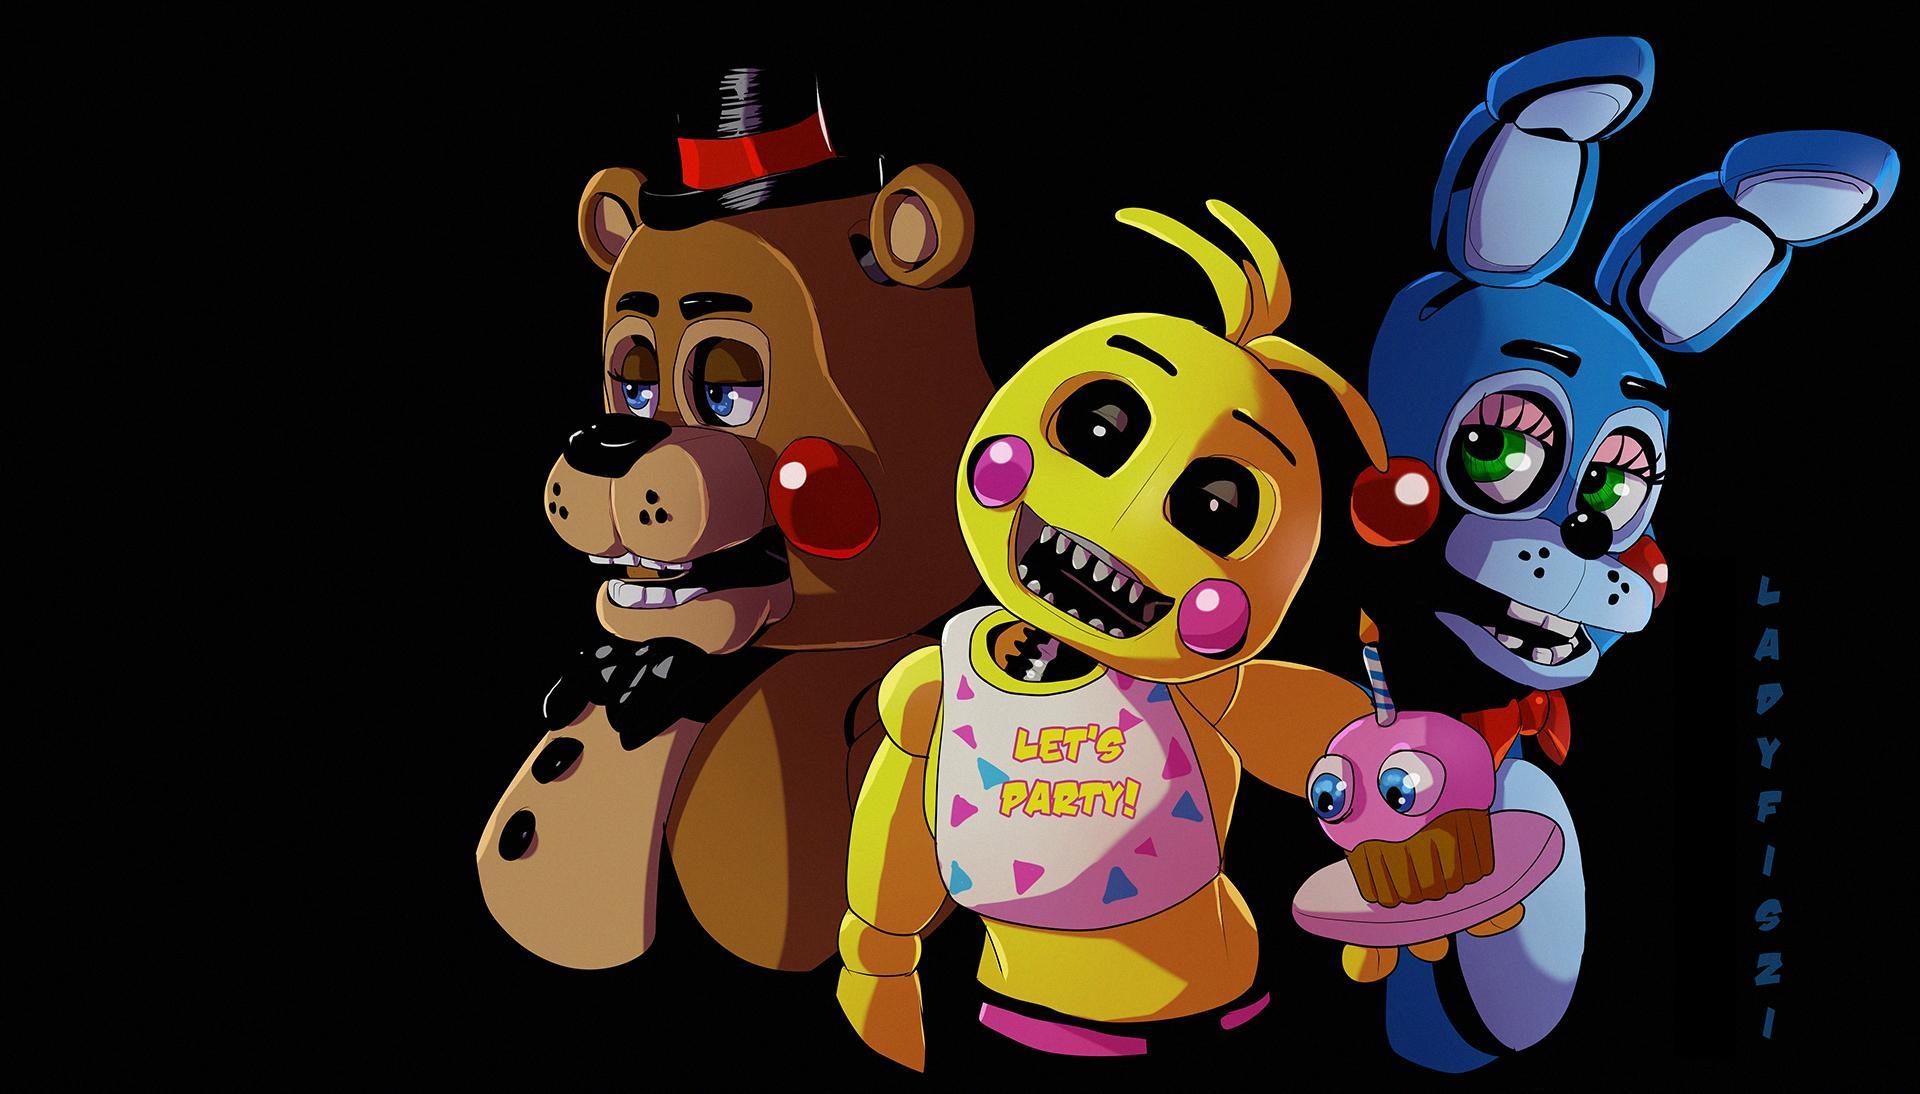 Five Nights At Freddy's 2 HD Wallpaper